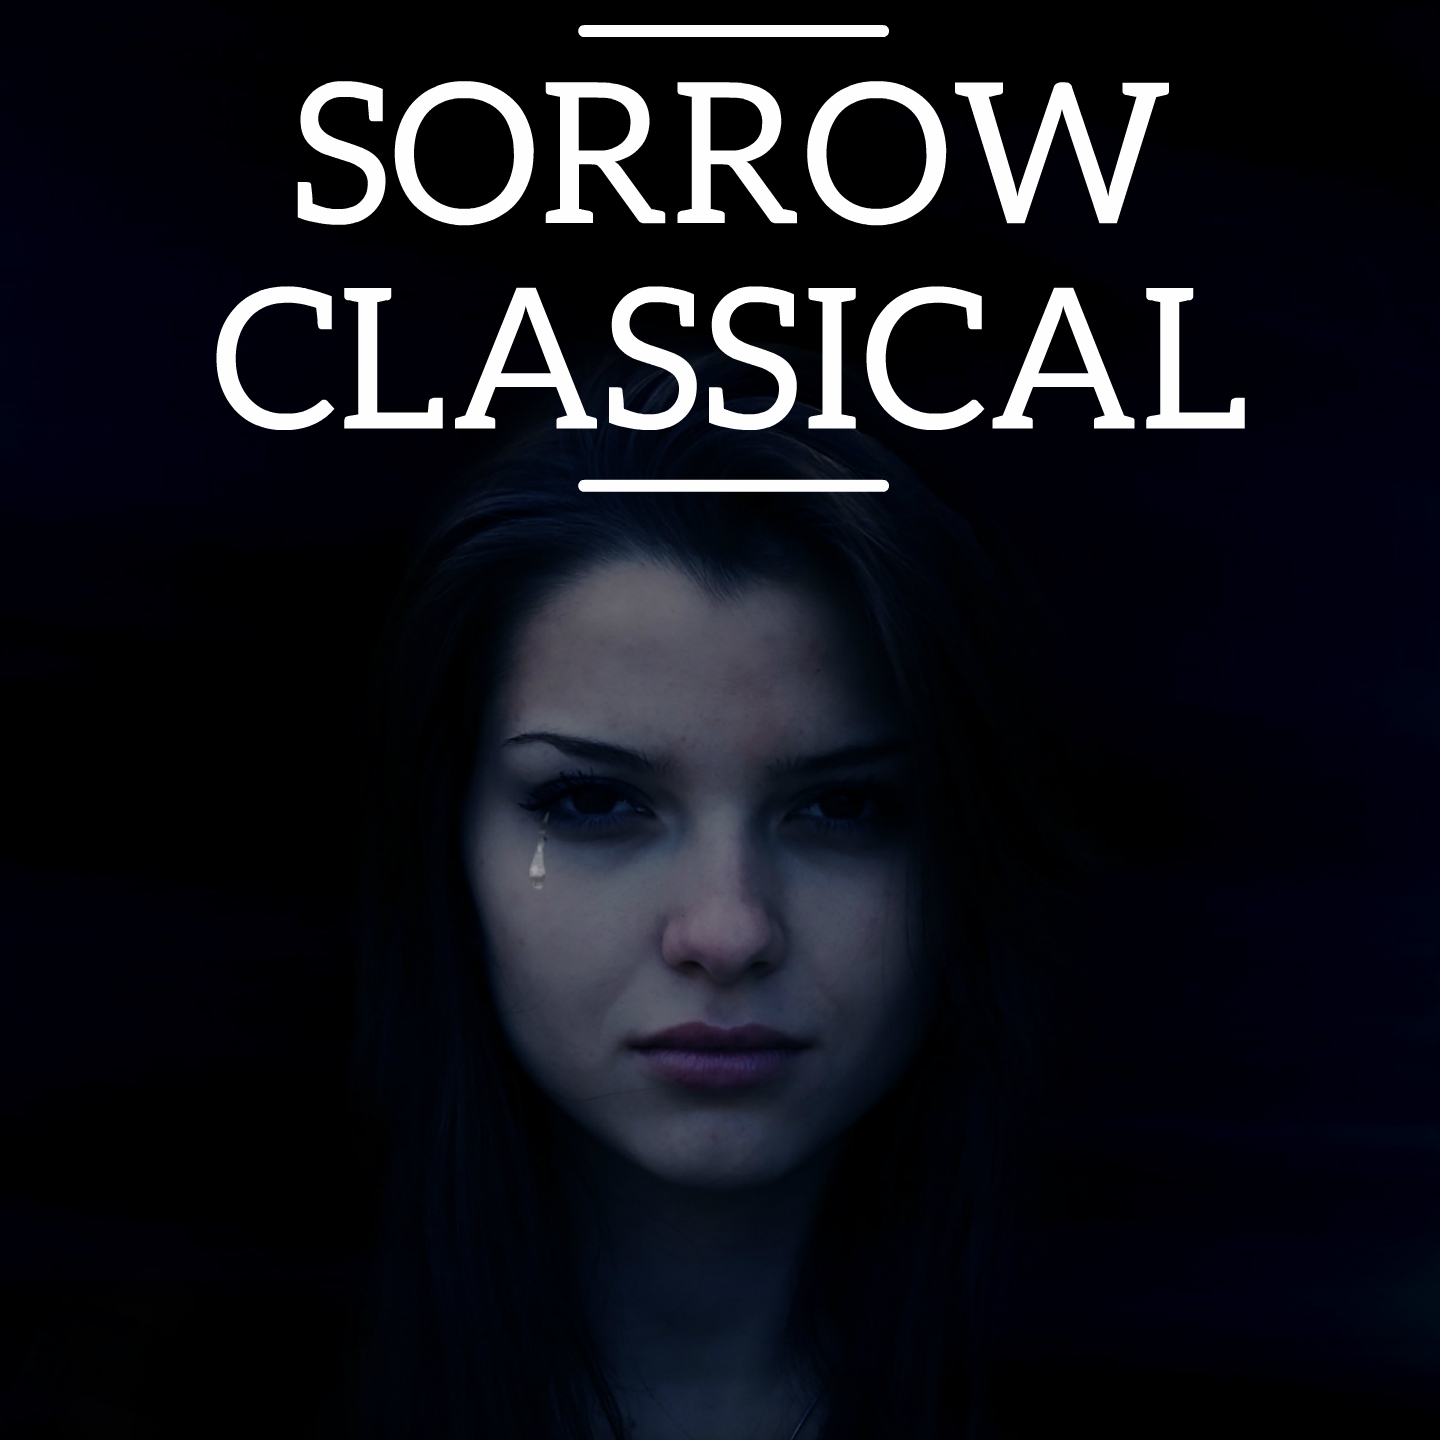 Sorrow Classical